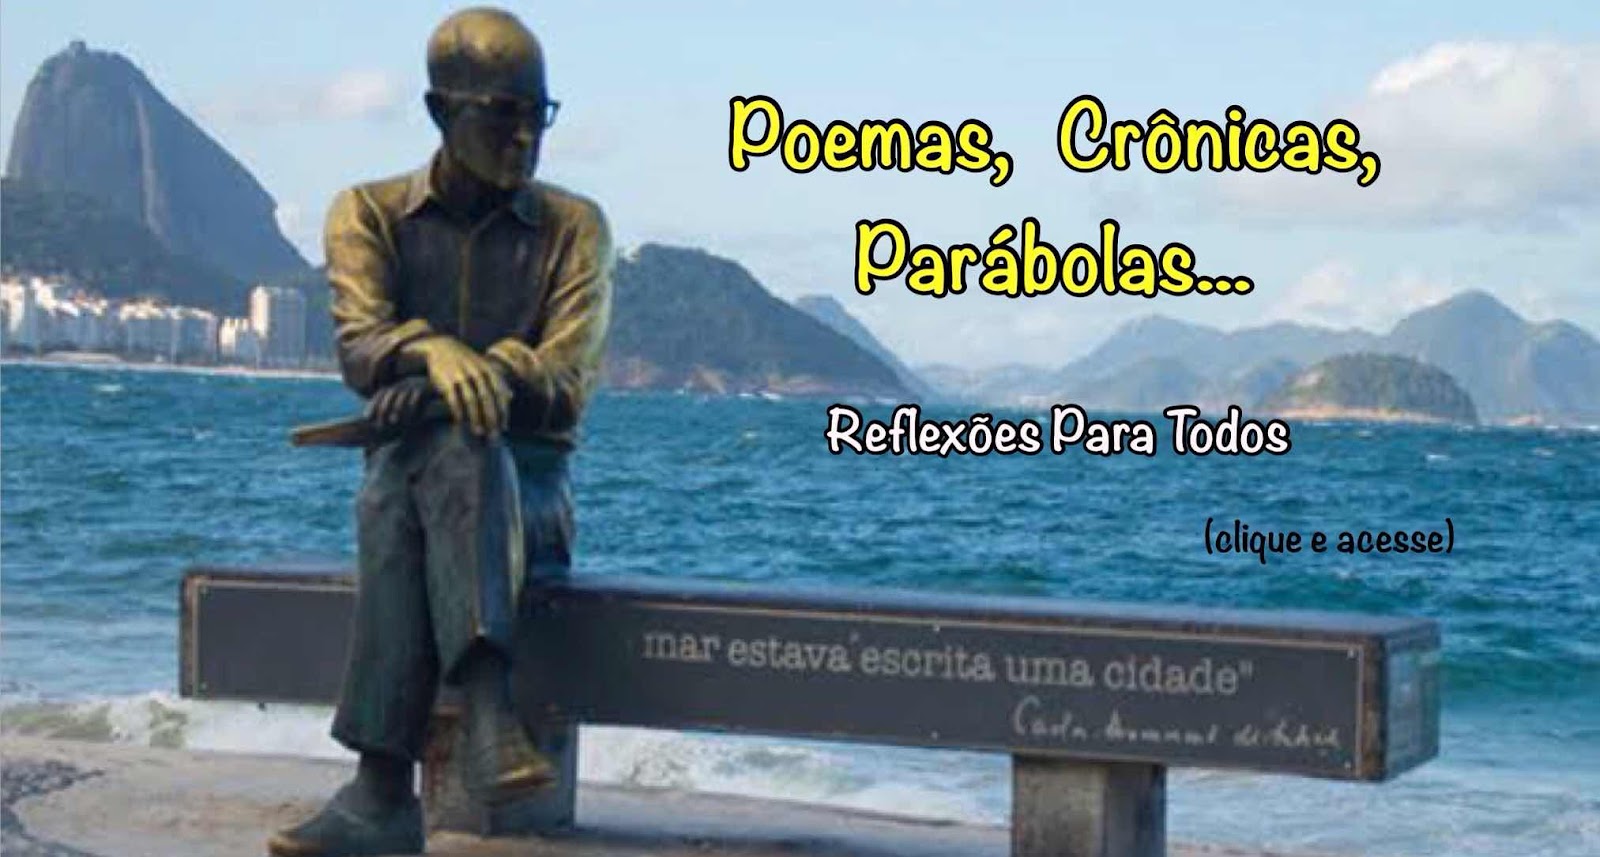  Poemas, Crônicas, Parábolas...